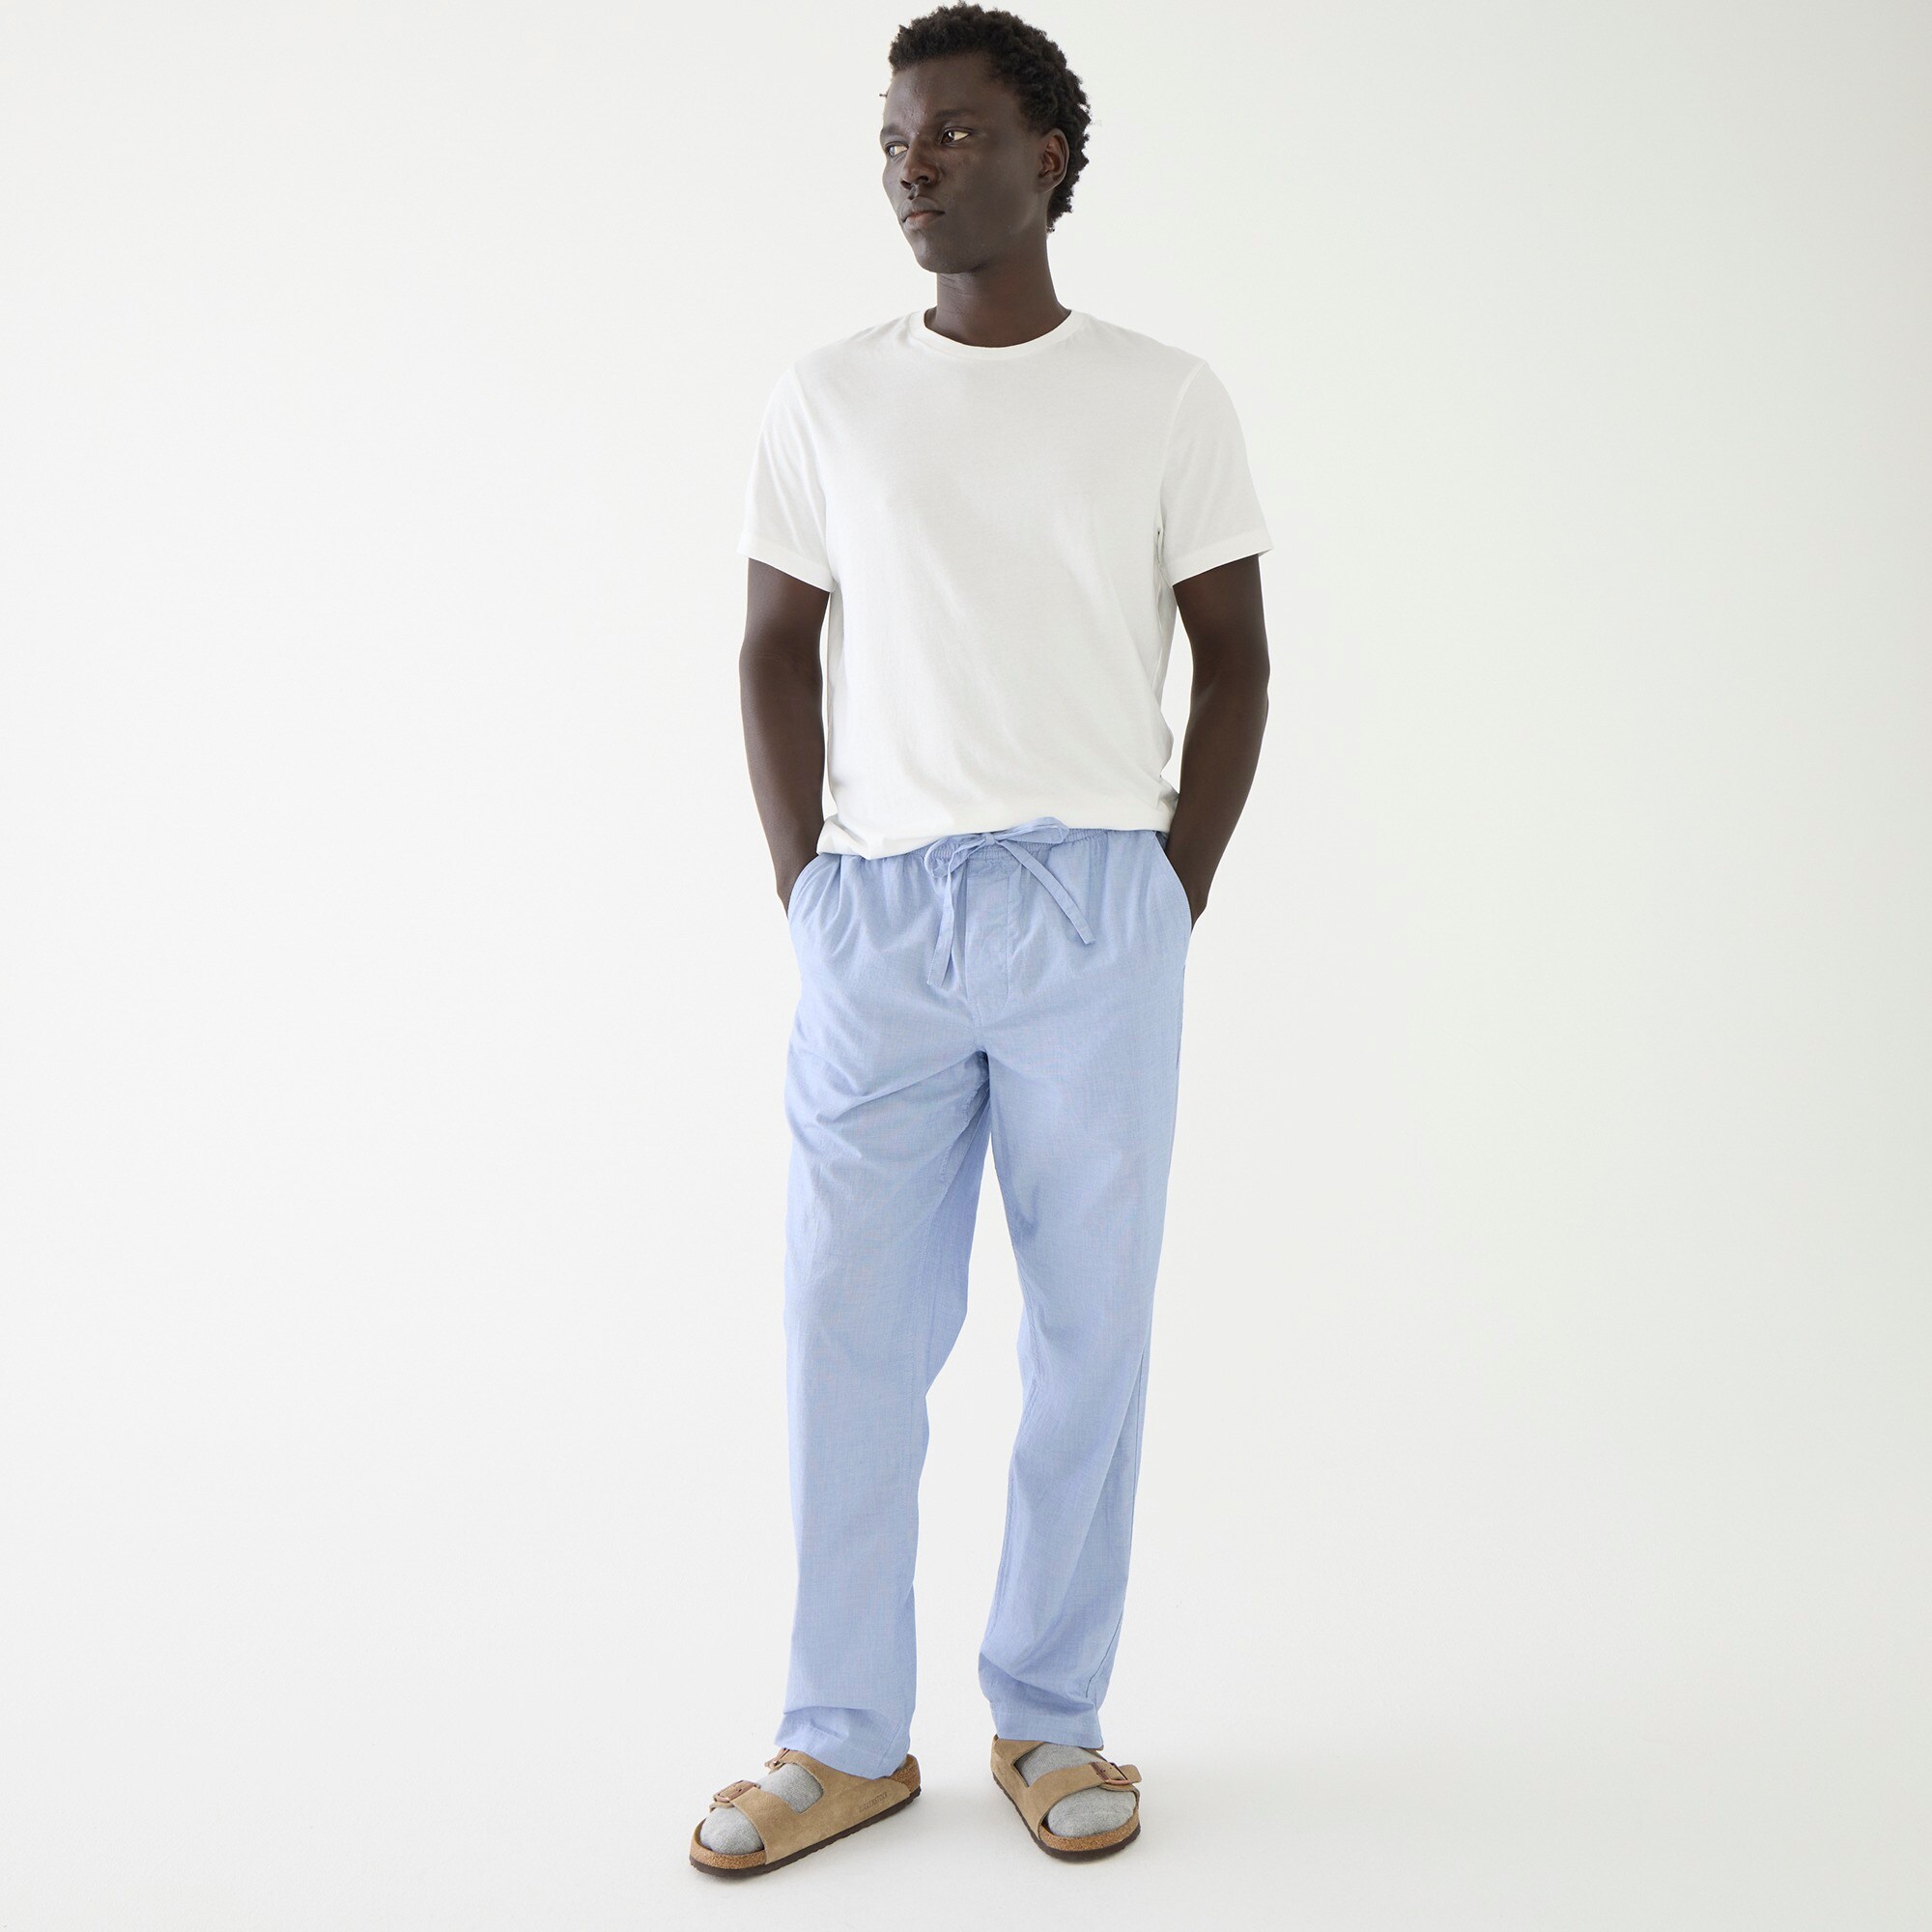 mens Pajama pant in cotton poplin